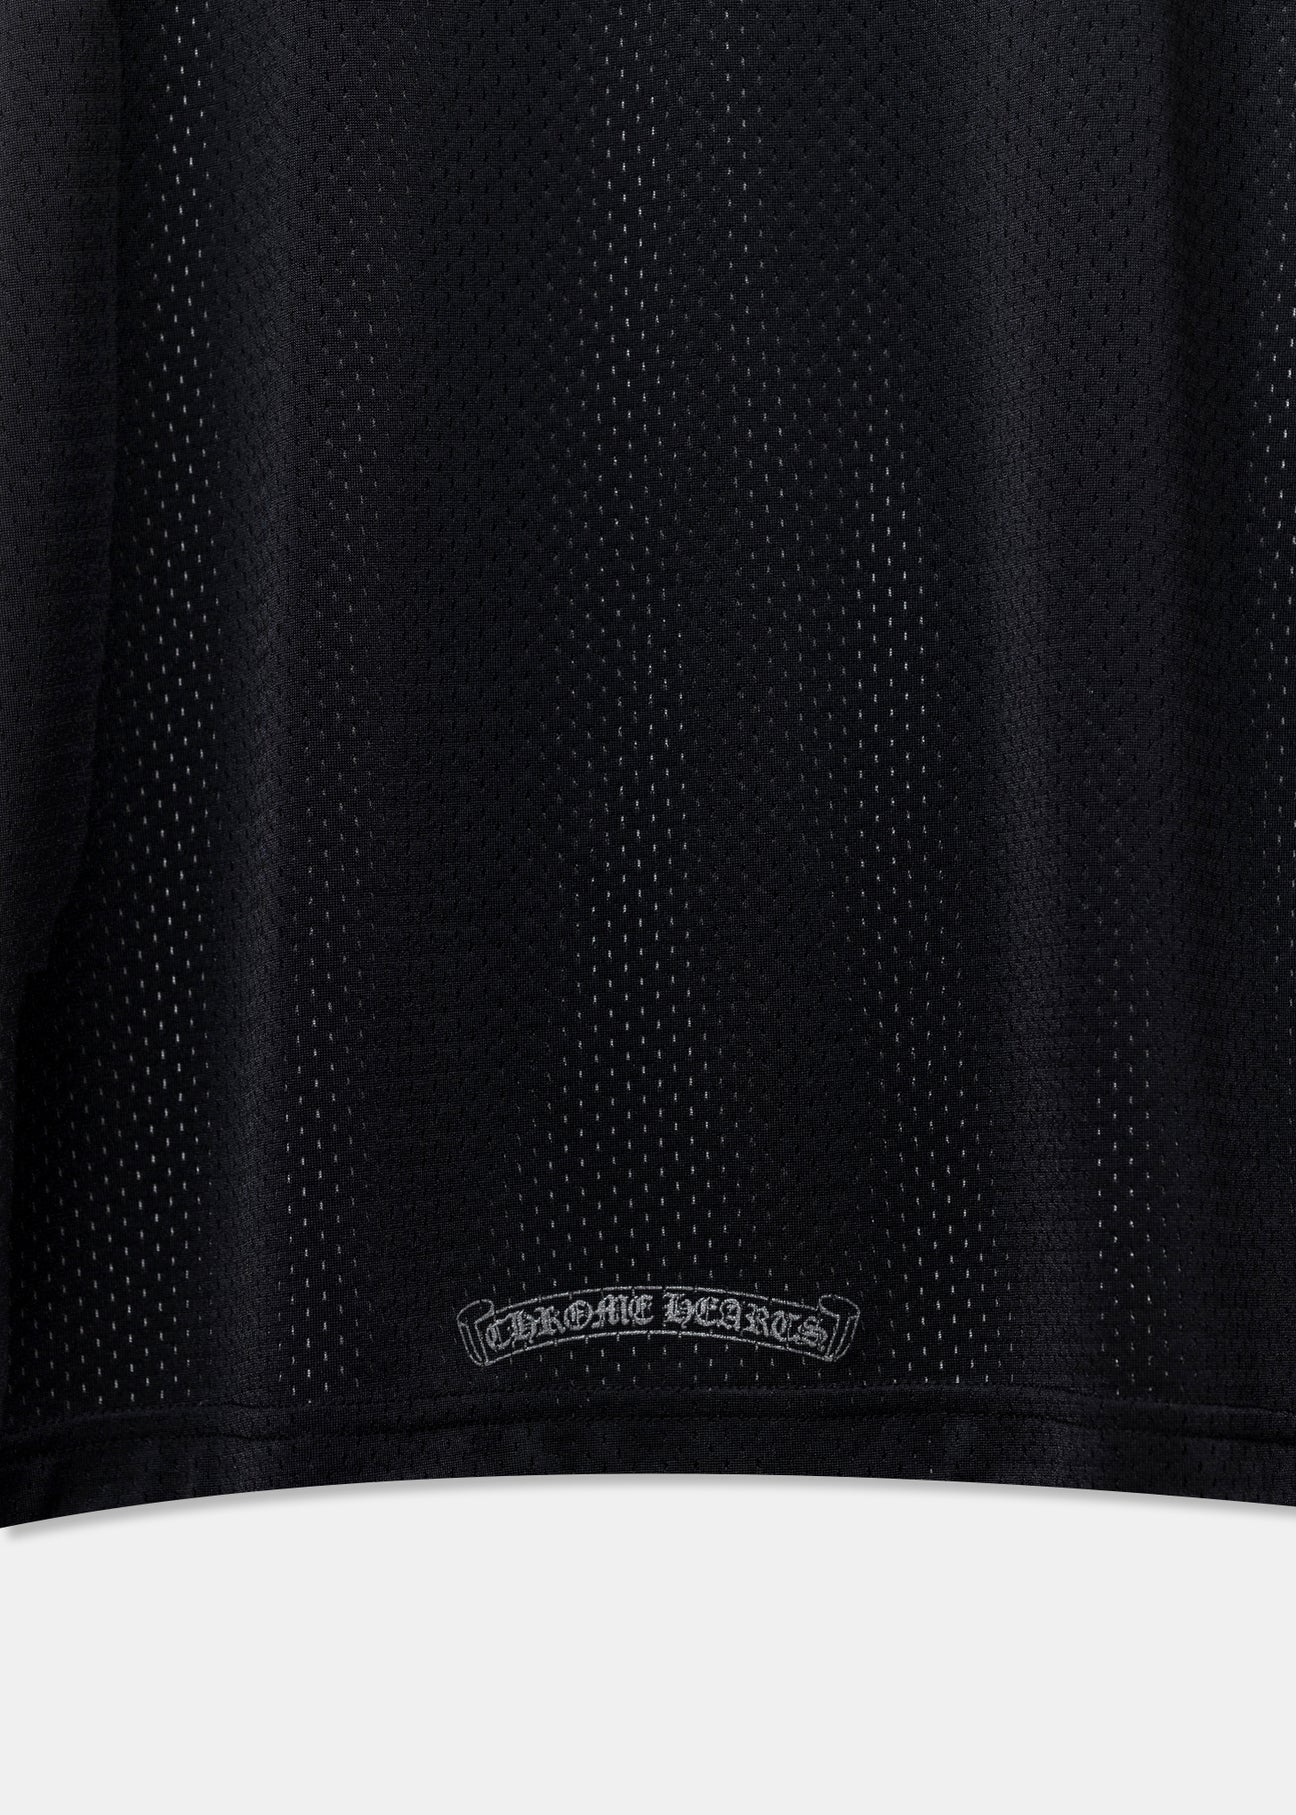 Black/Grey Reversible Basketball Jersey - 7